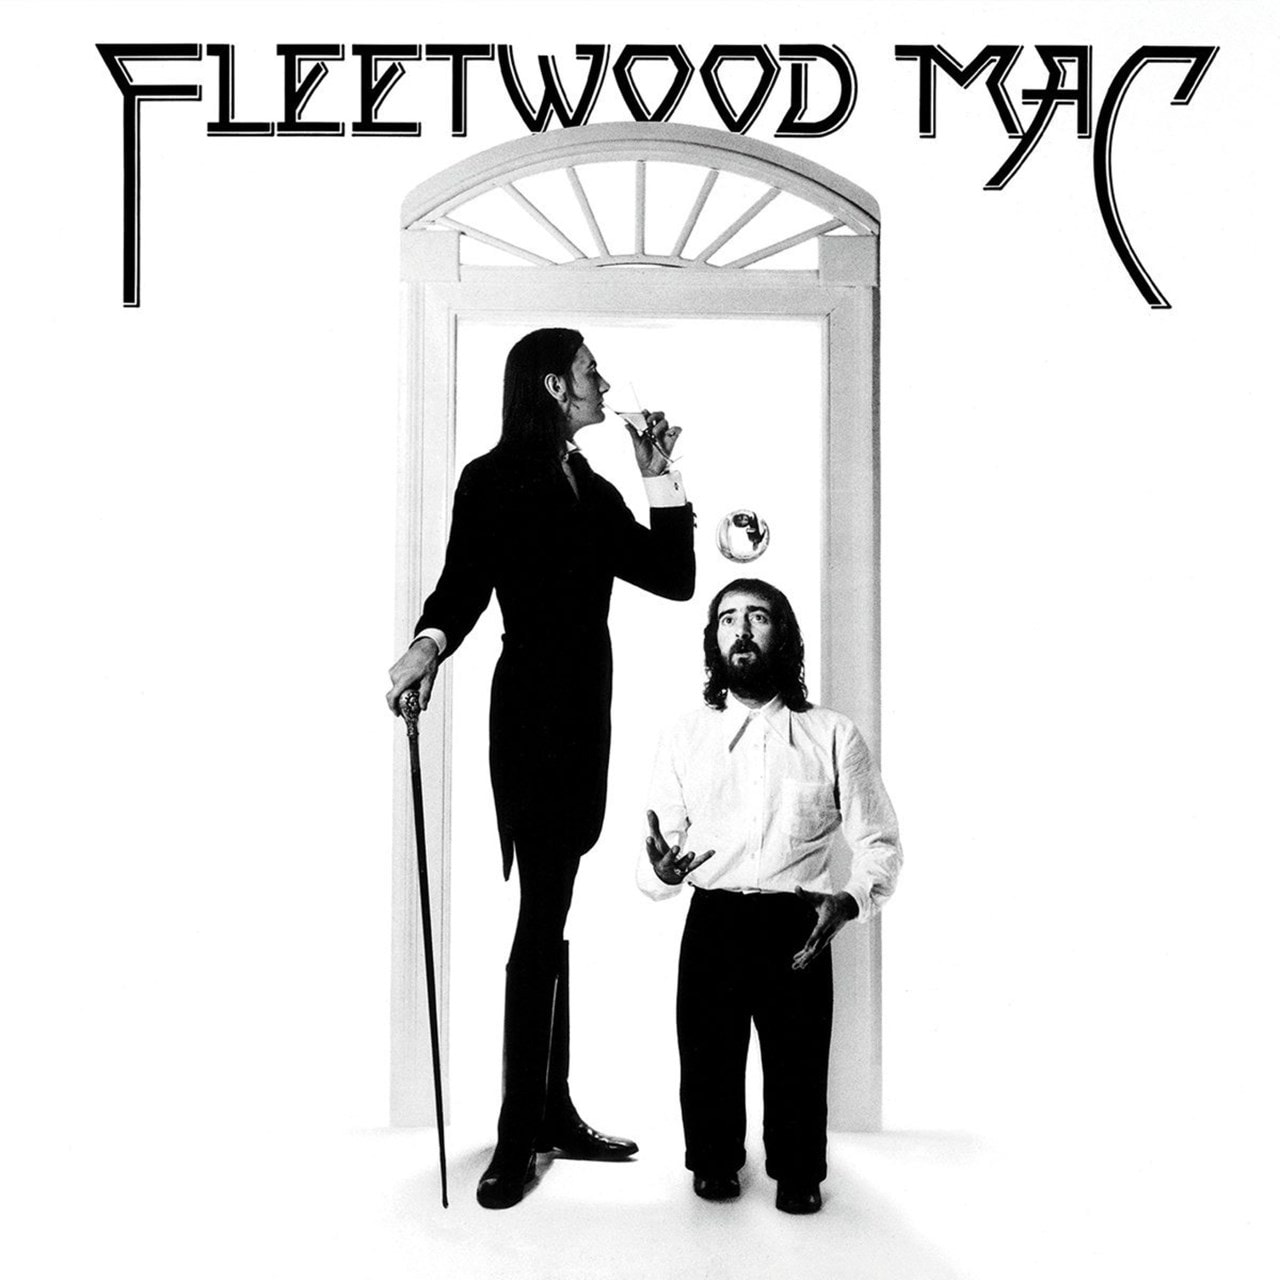 fleetwood mac album download free